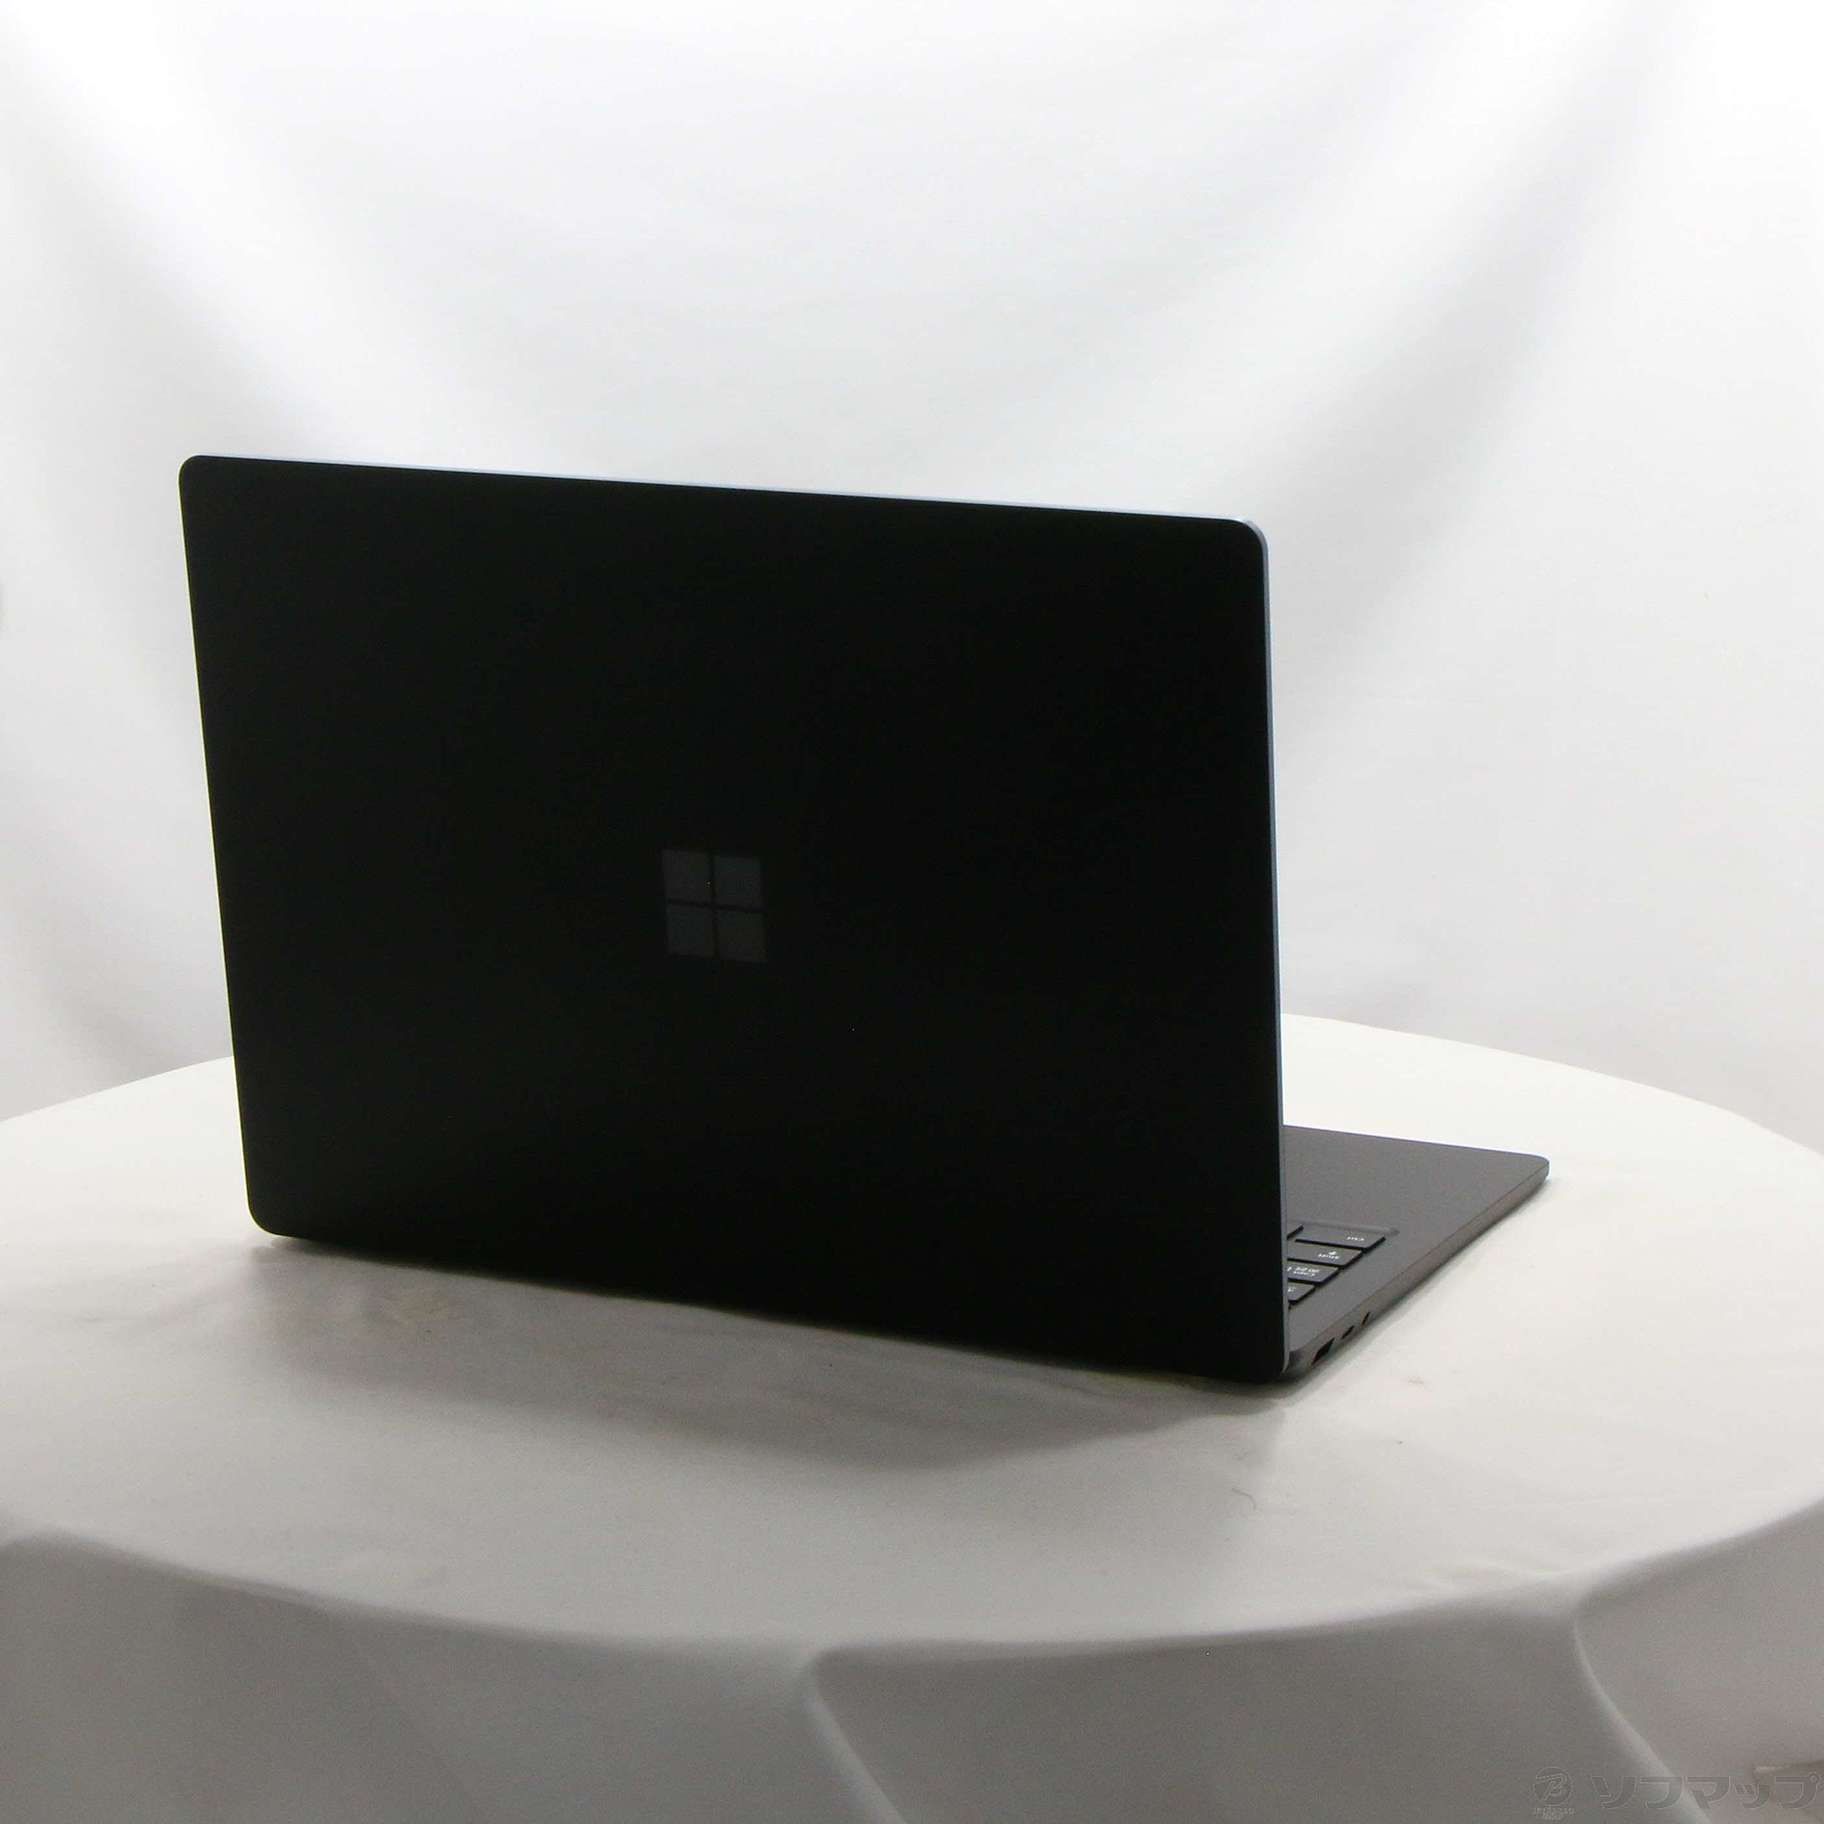 Microsoft Surface Laptop 4ブラック 5BT-00016